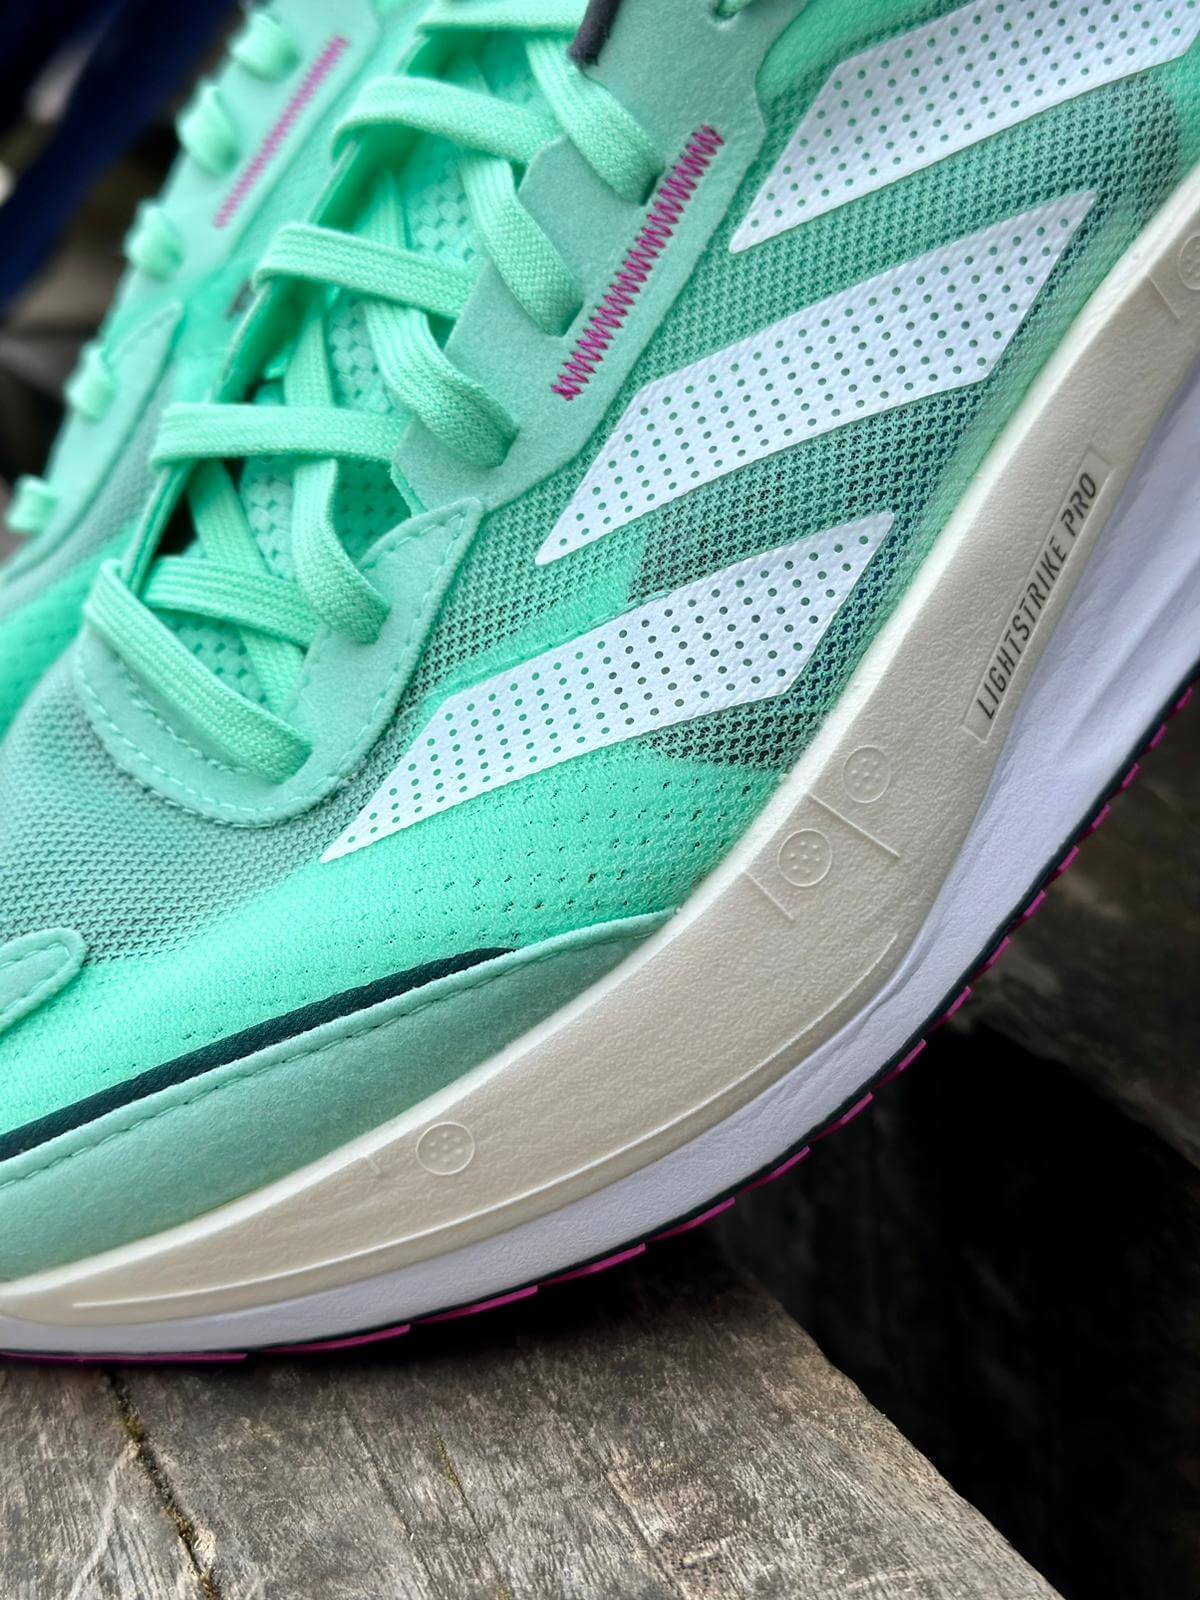  Upper of adidas Adizero Boston 11 running shoe in Pulse Mint colourway